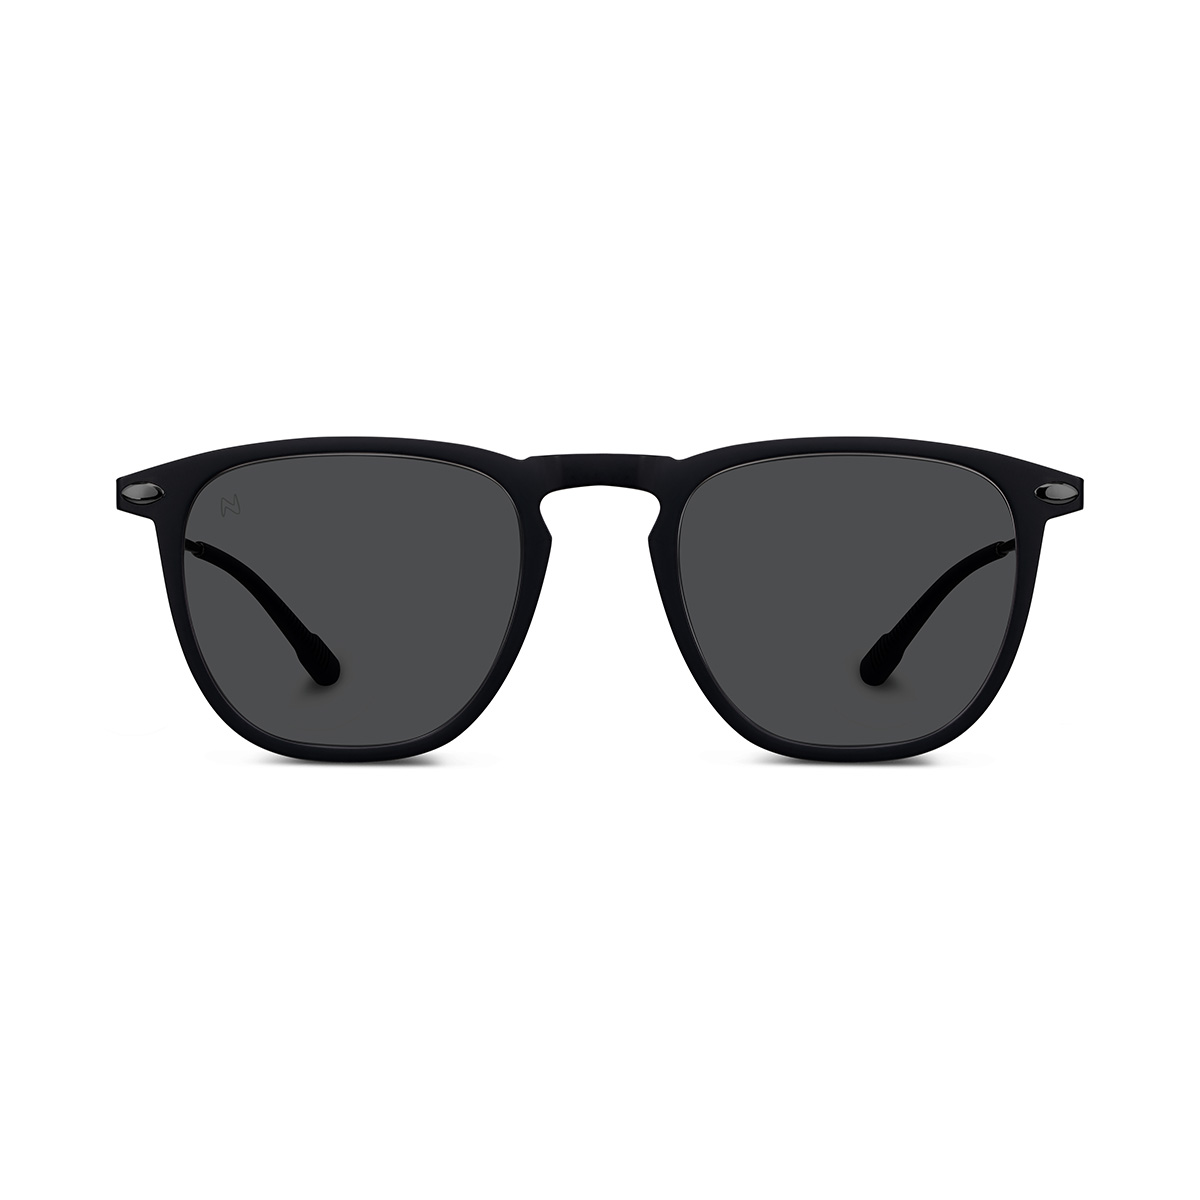 Essential Dino Black Face Sunglasses